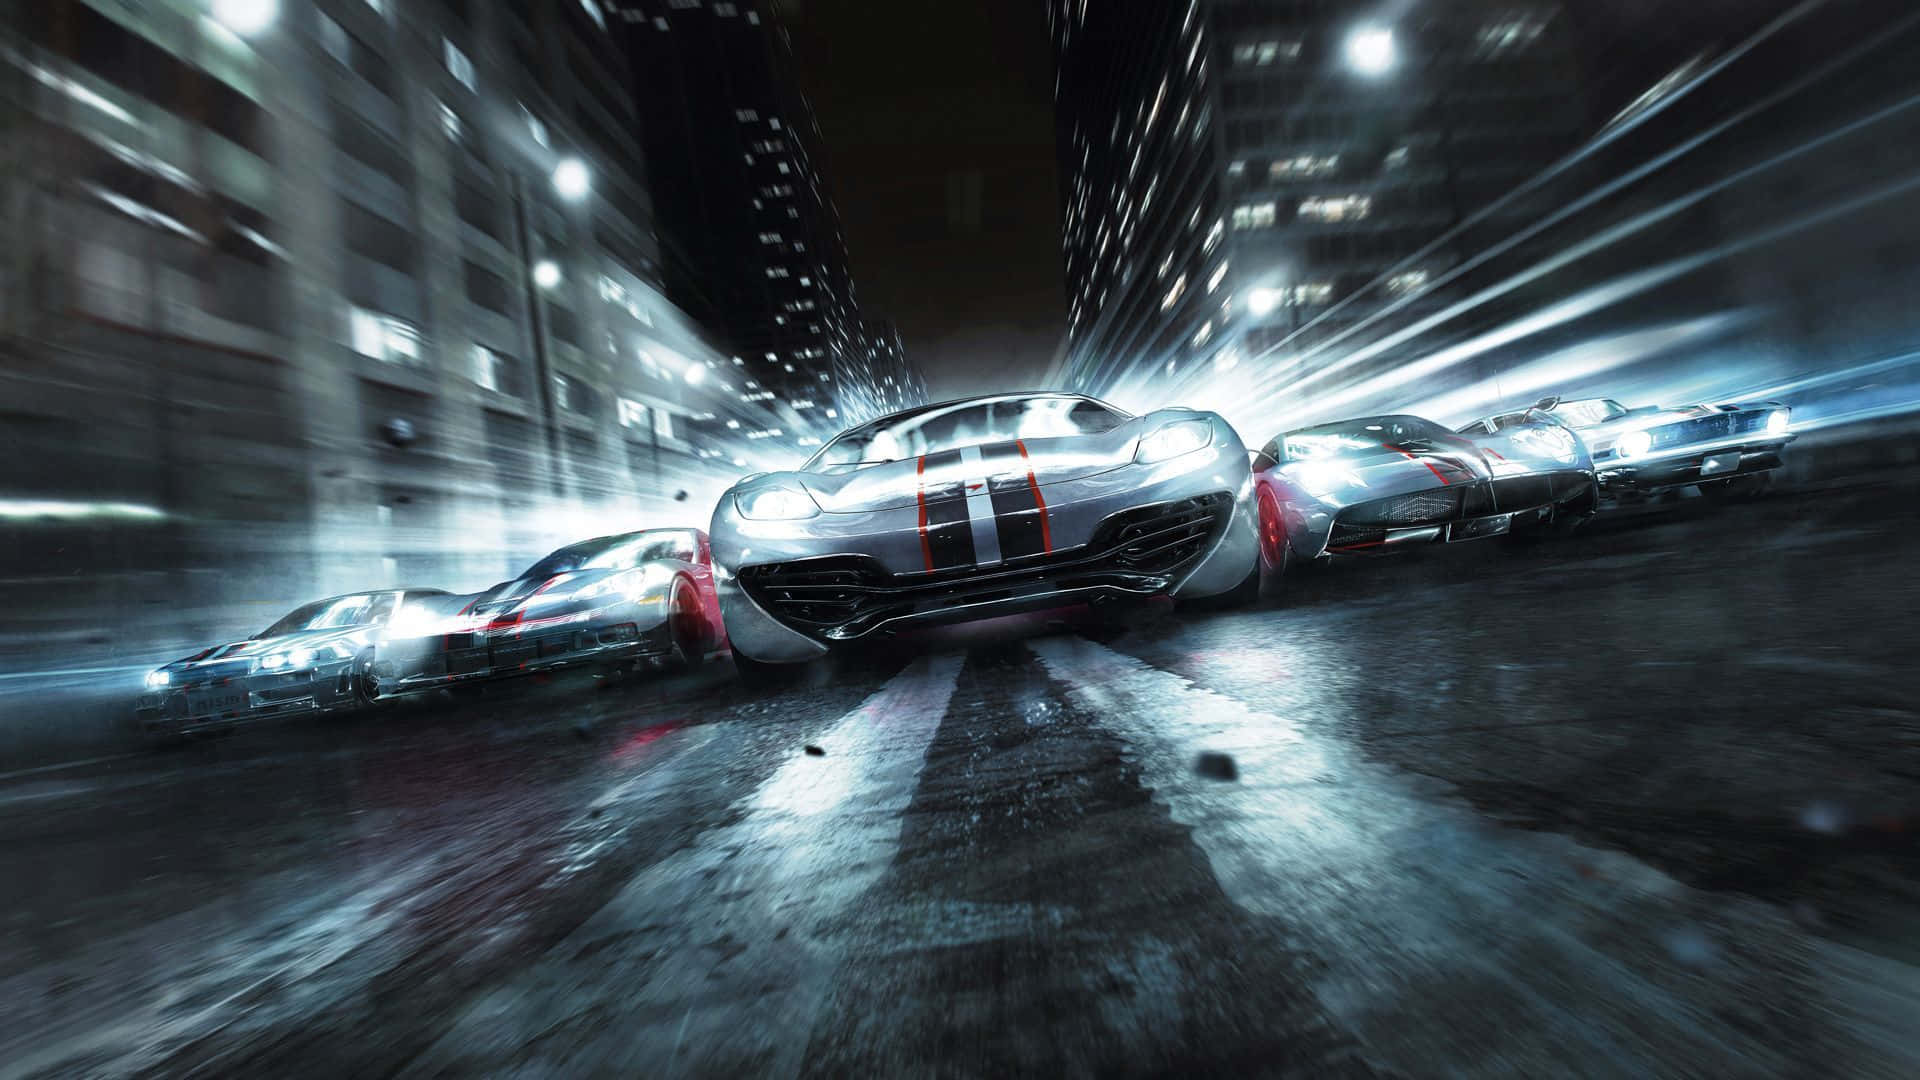 High-Octane Racing Car Drifting In Action Wallpaper